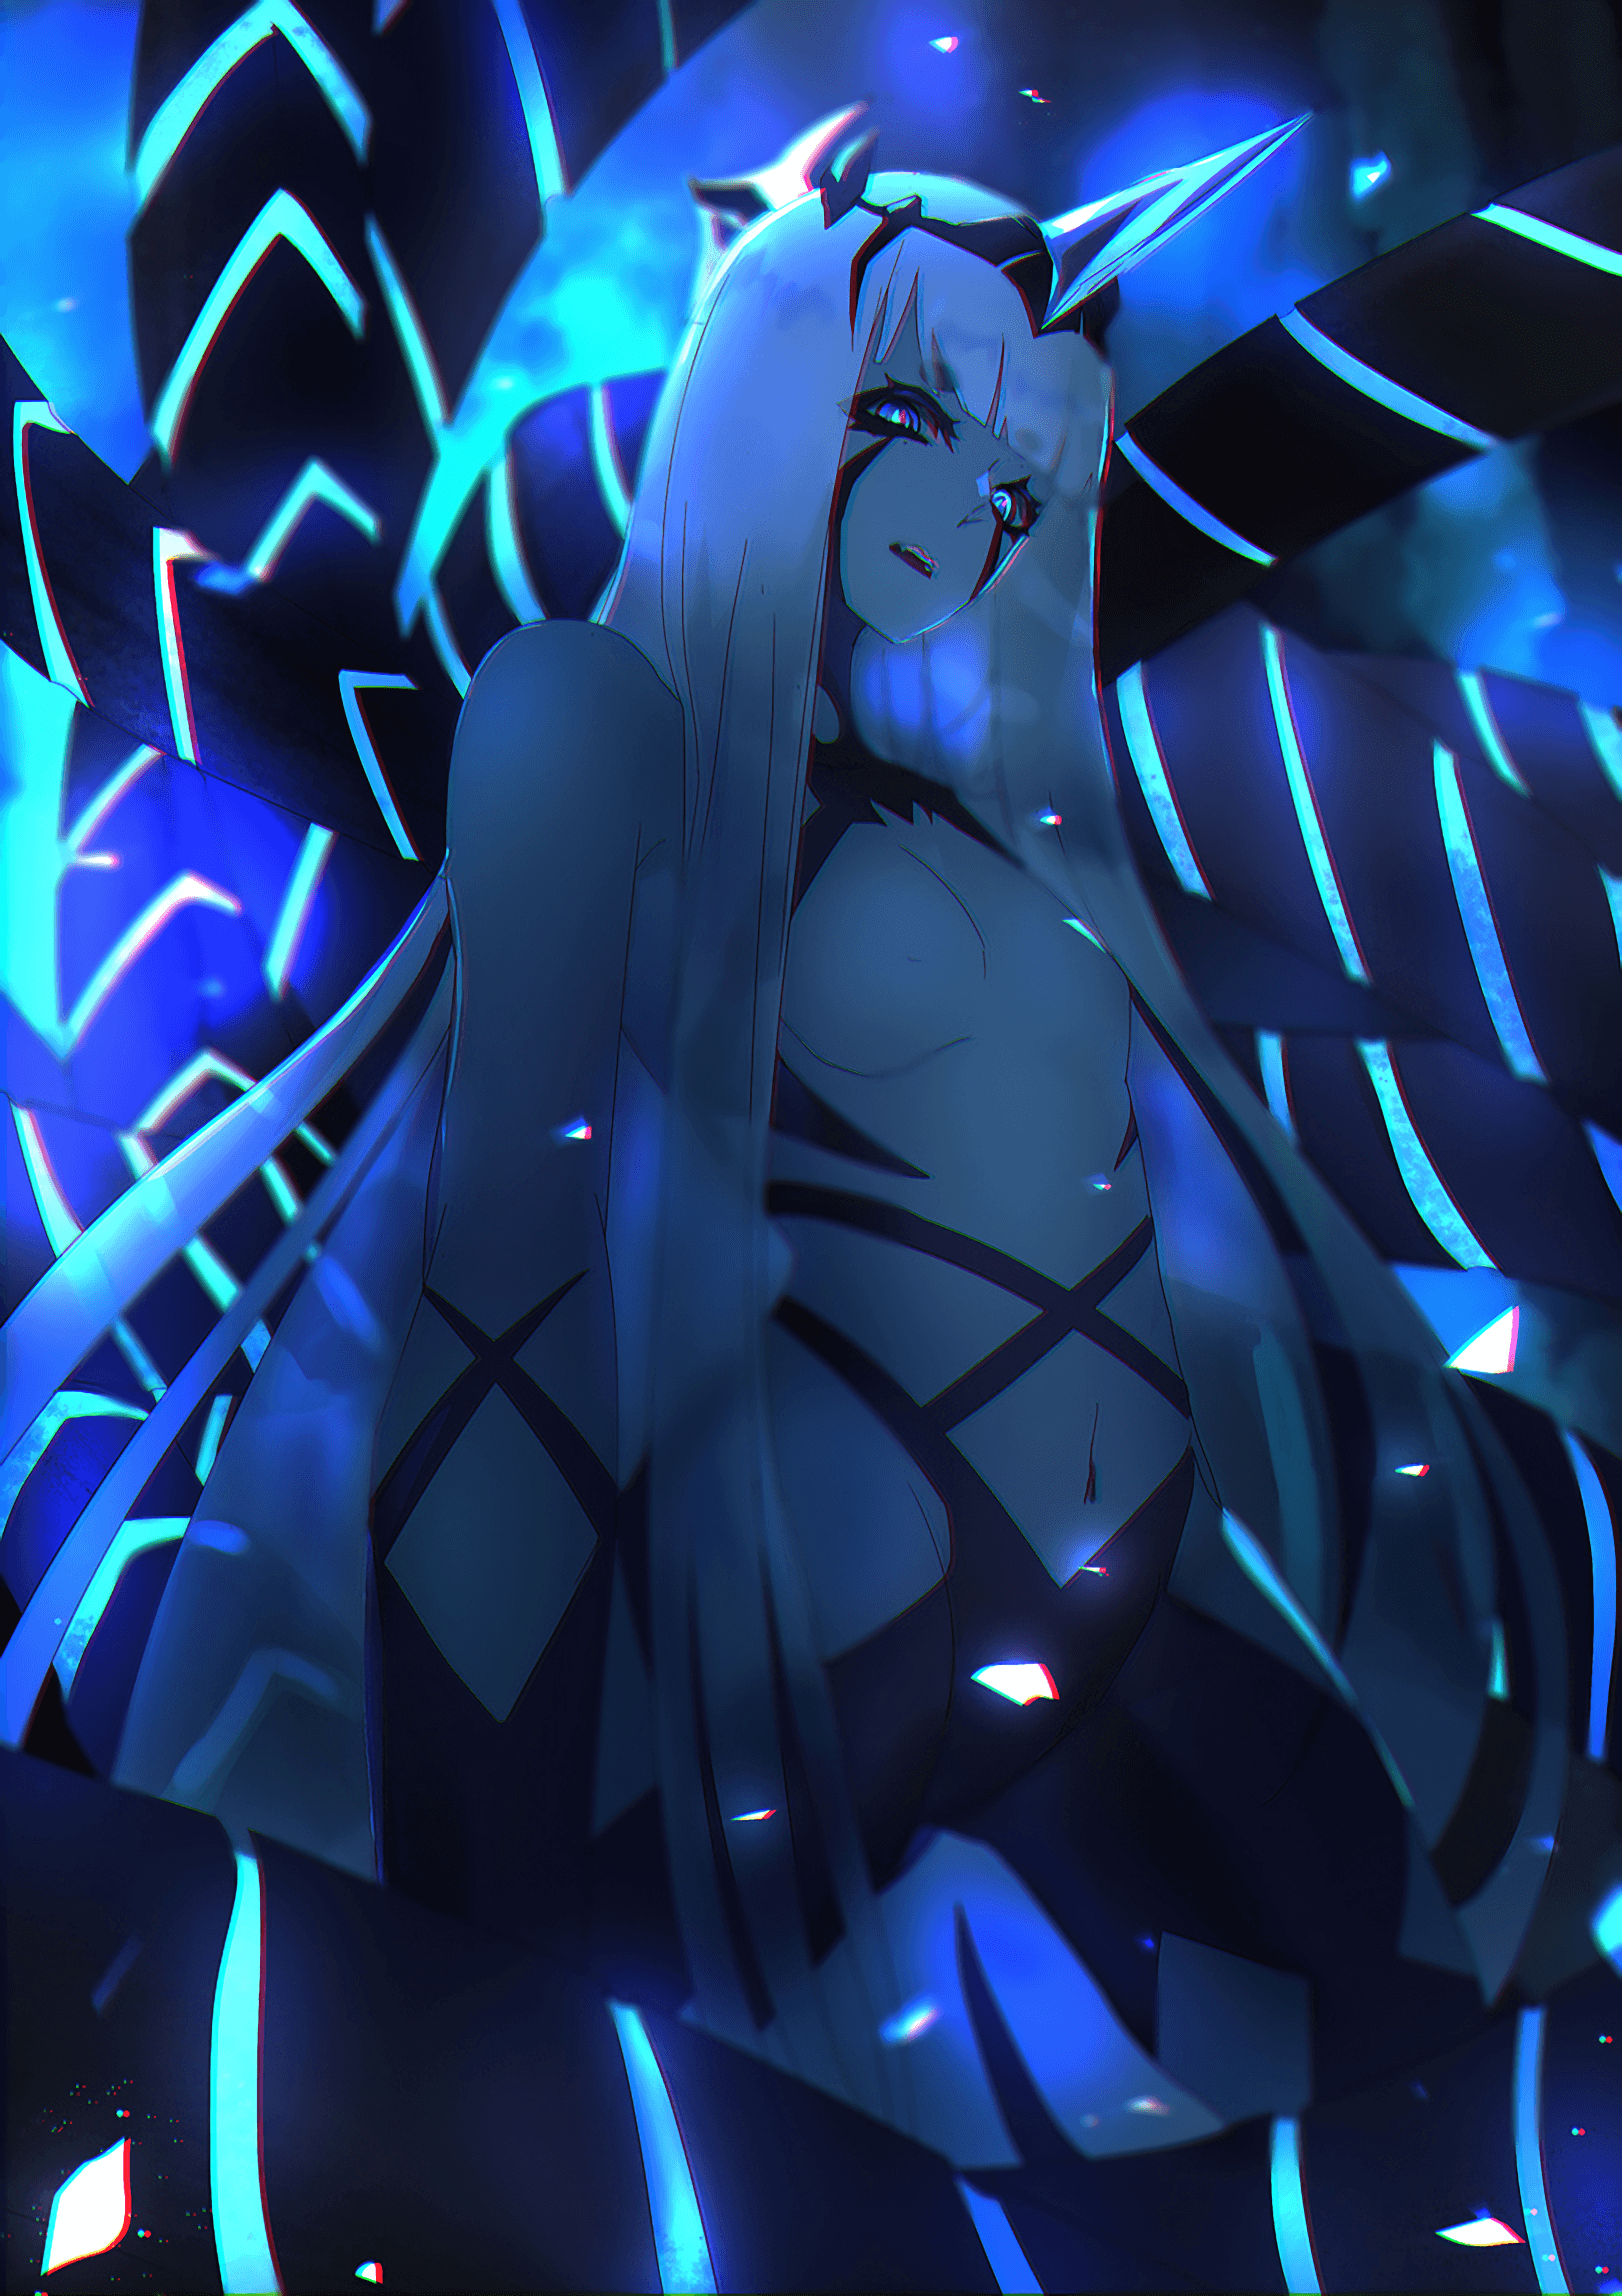 The Blue Queen Dragon